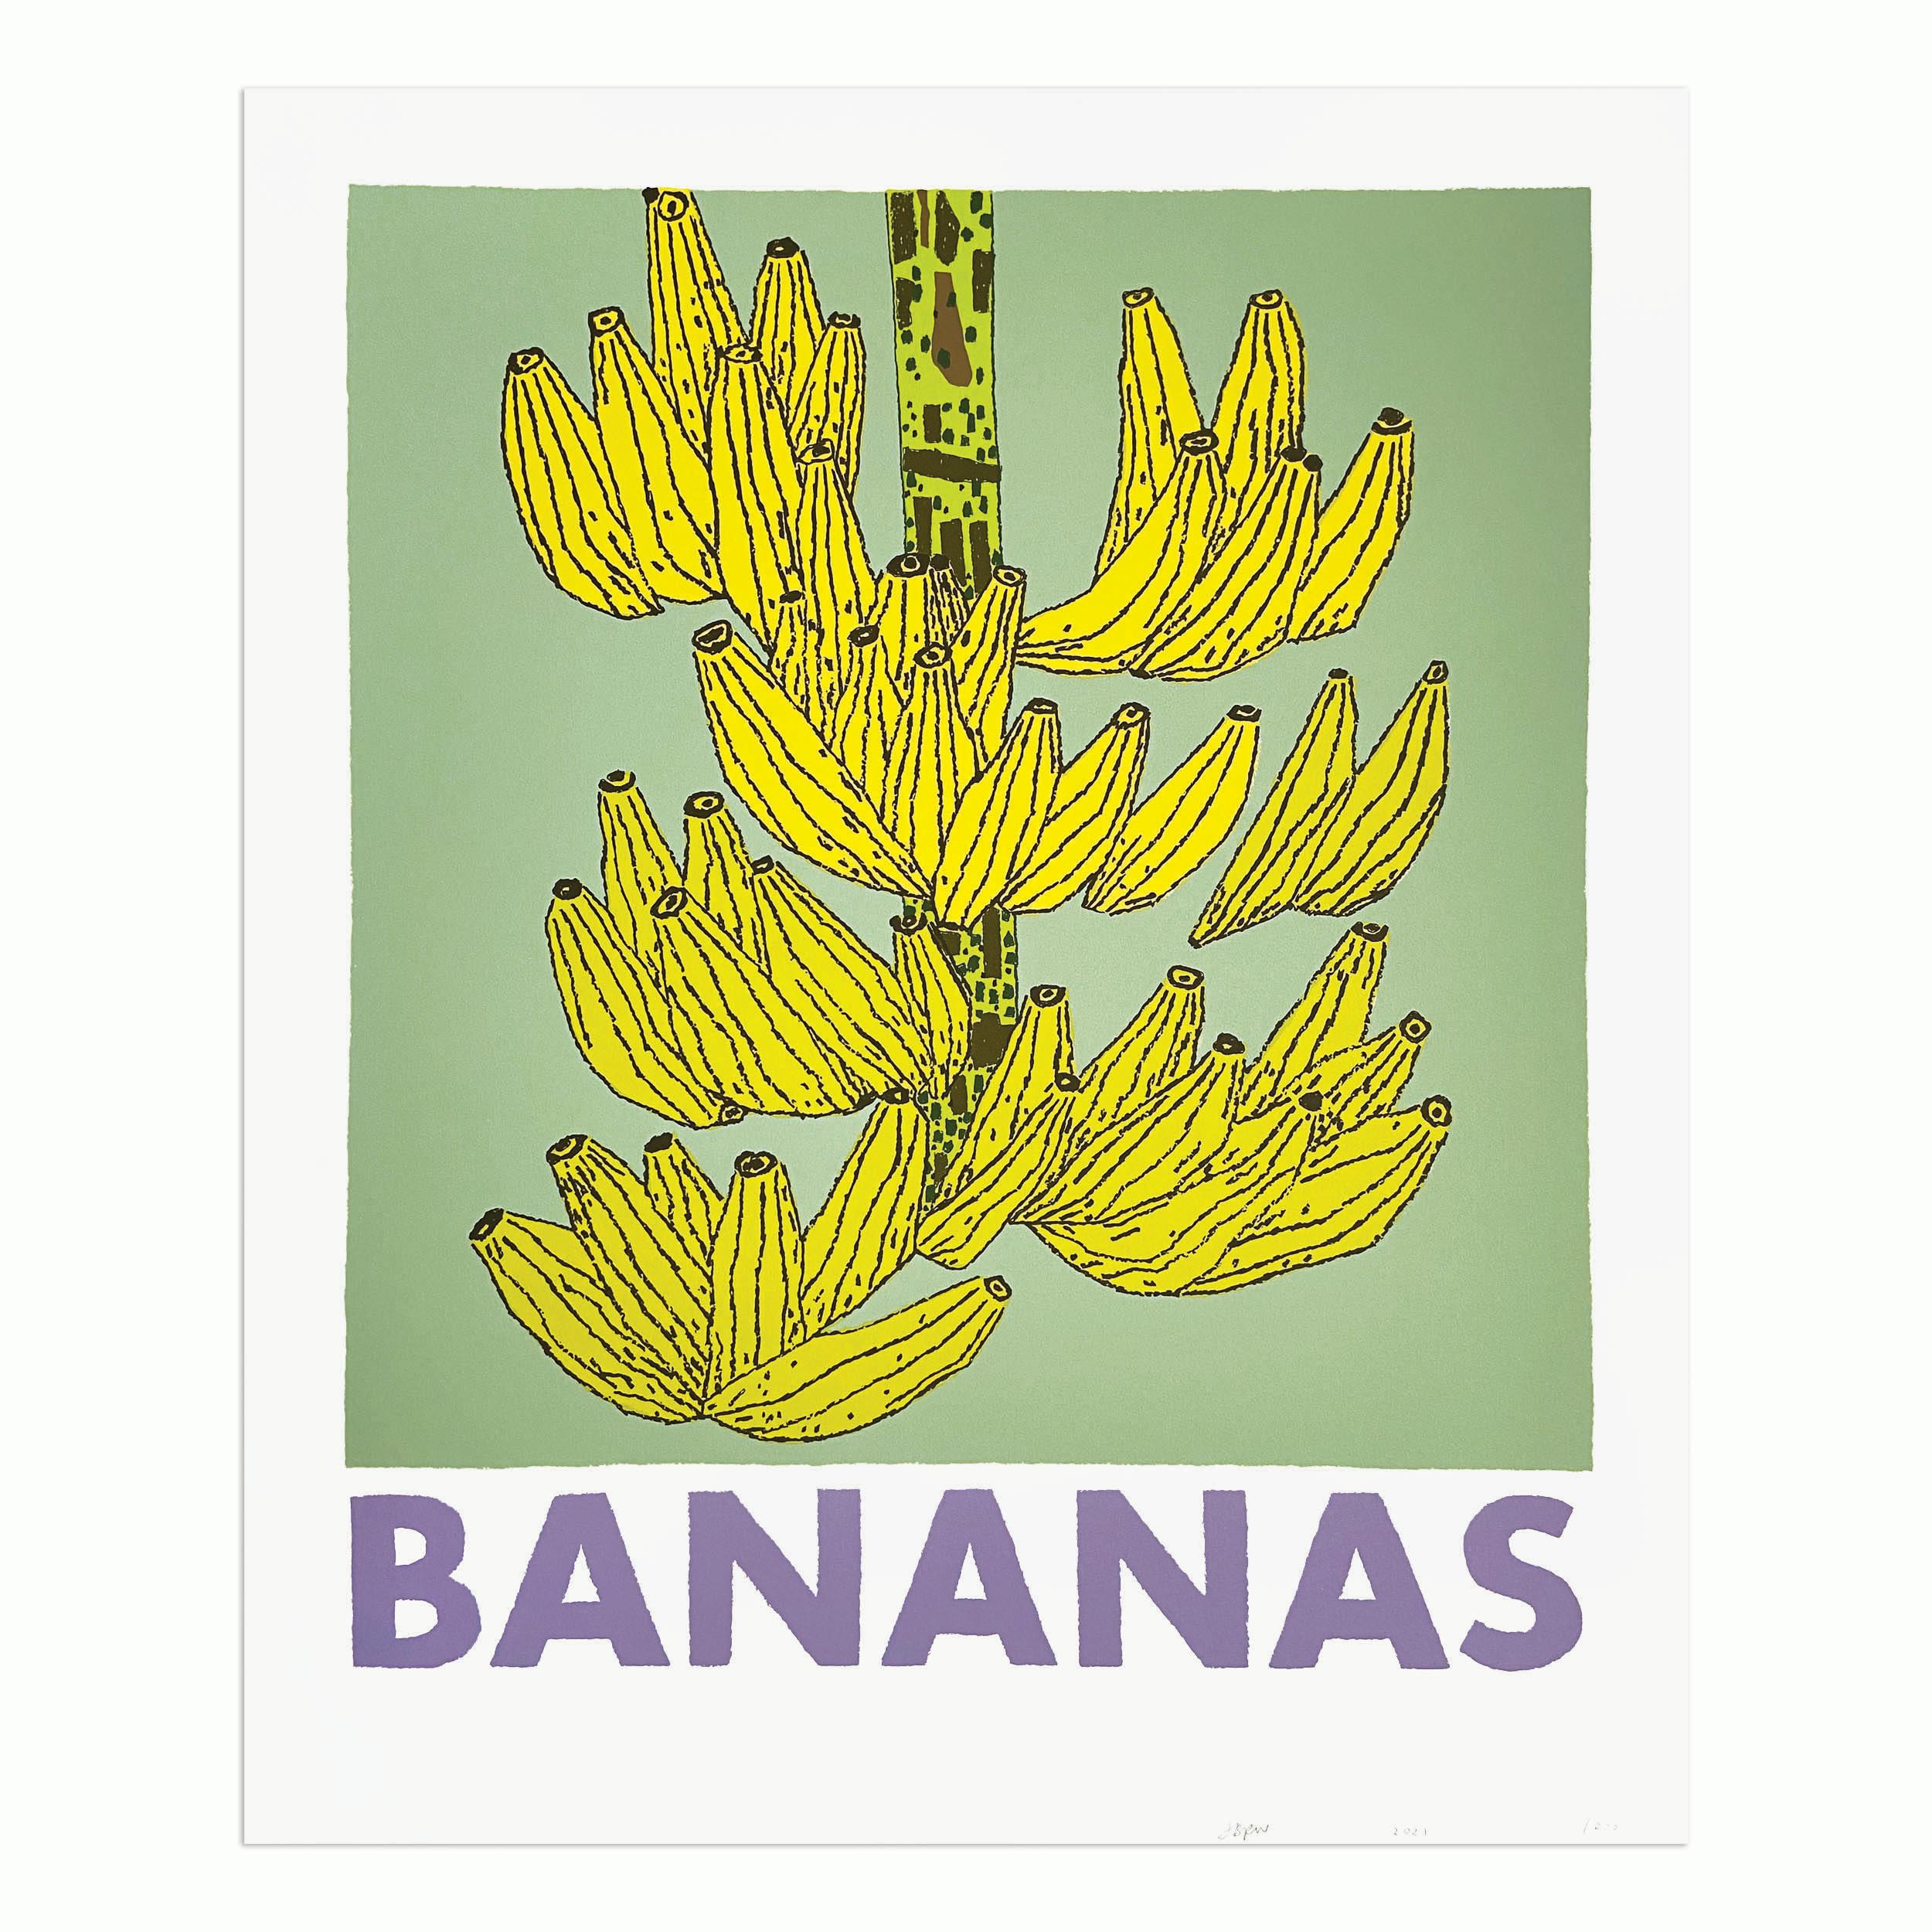 Jonas Wood, Bananas - Signed Print, Contemporary Art, Still Life, Screenprint